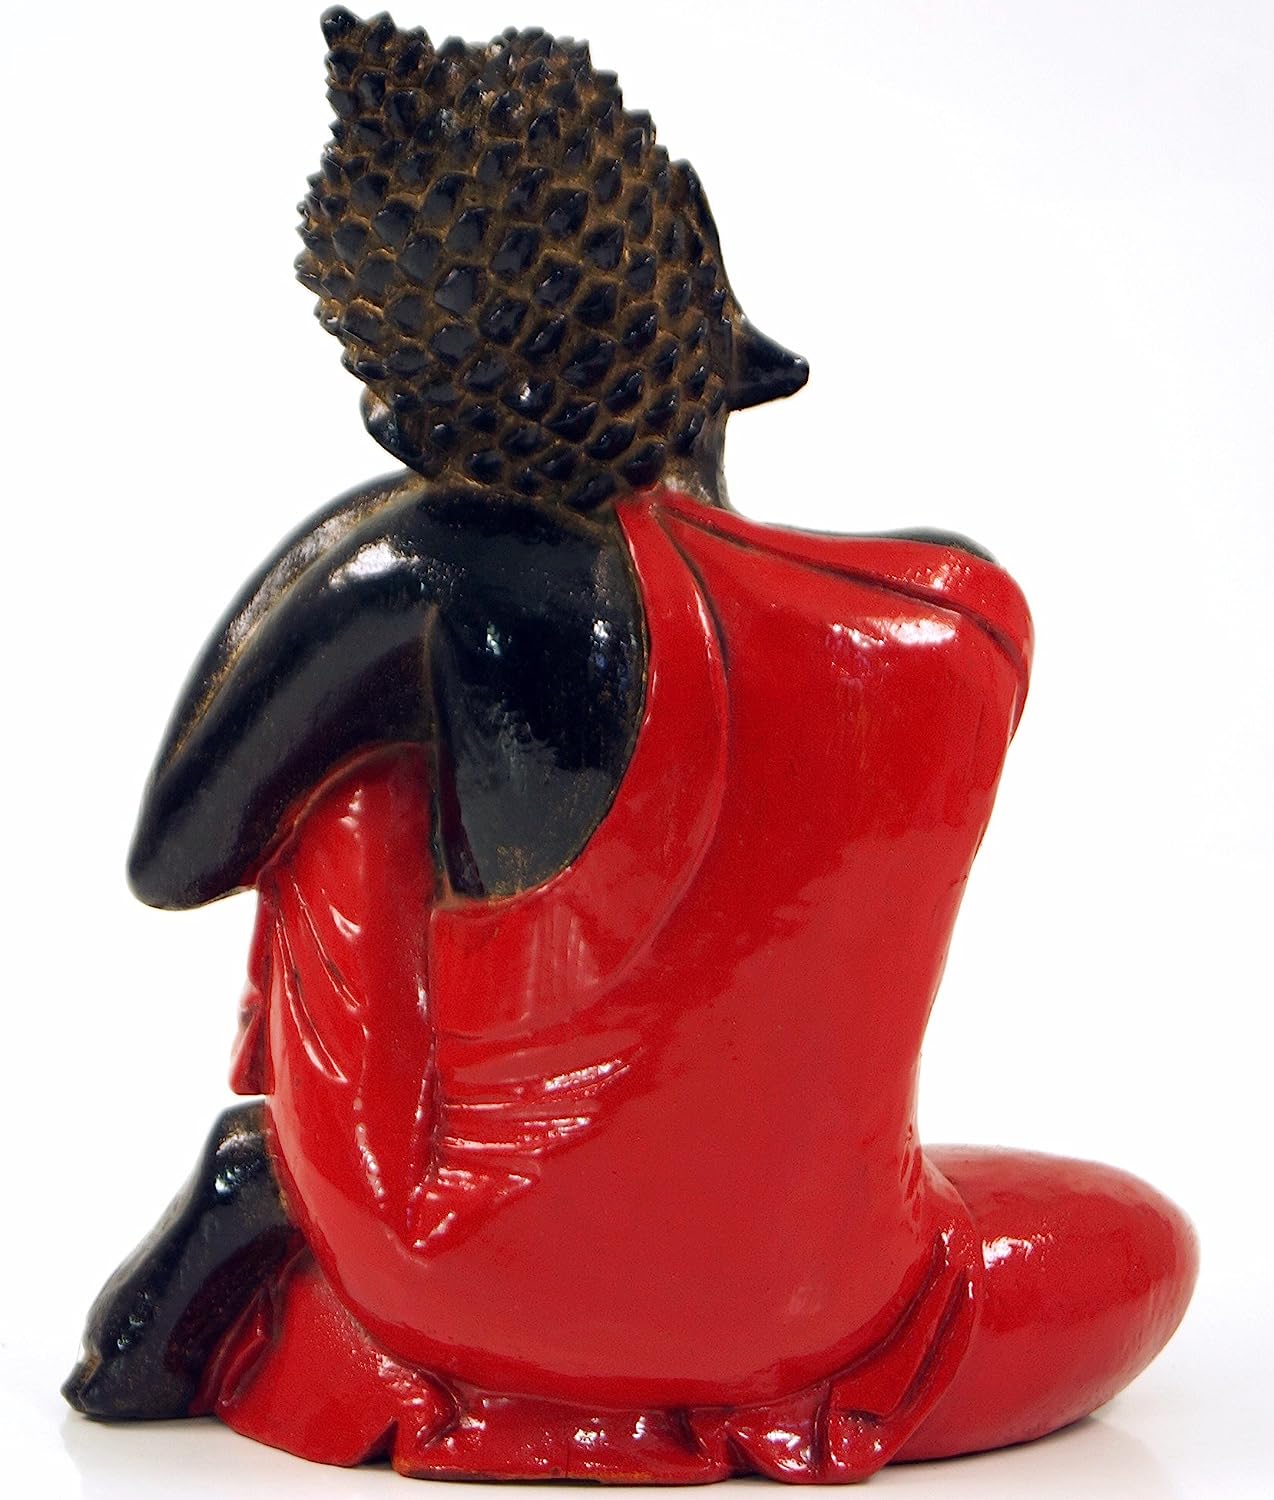 GURU SHOP Carved Sitting Buddha Figurine, Dreaming Buddha - Red/Right, 28 x 21 x 12 cm, Buddha